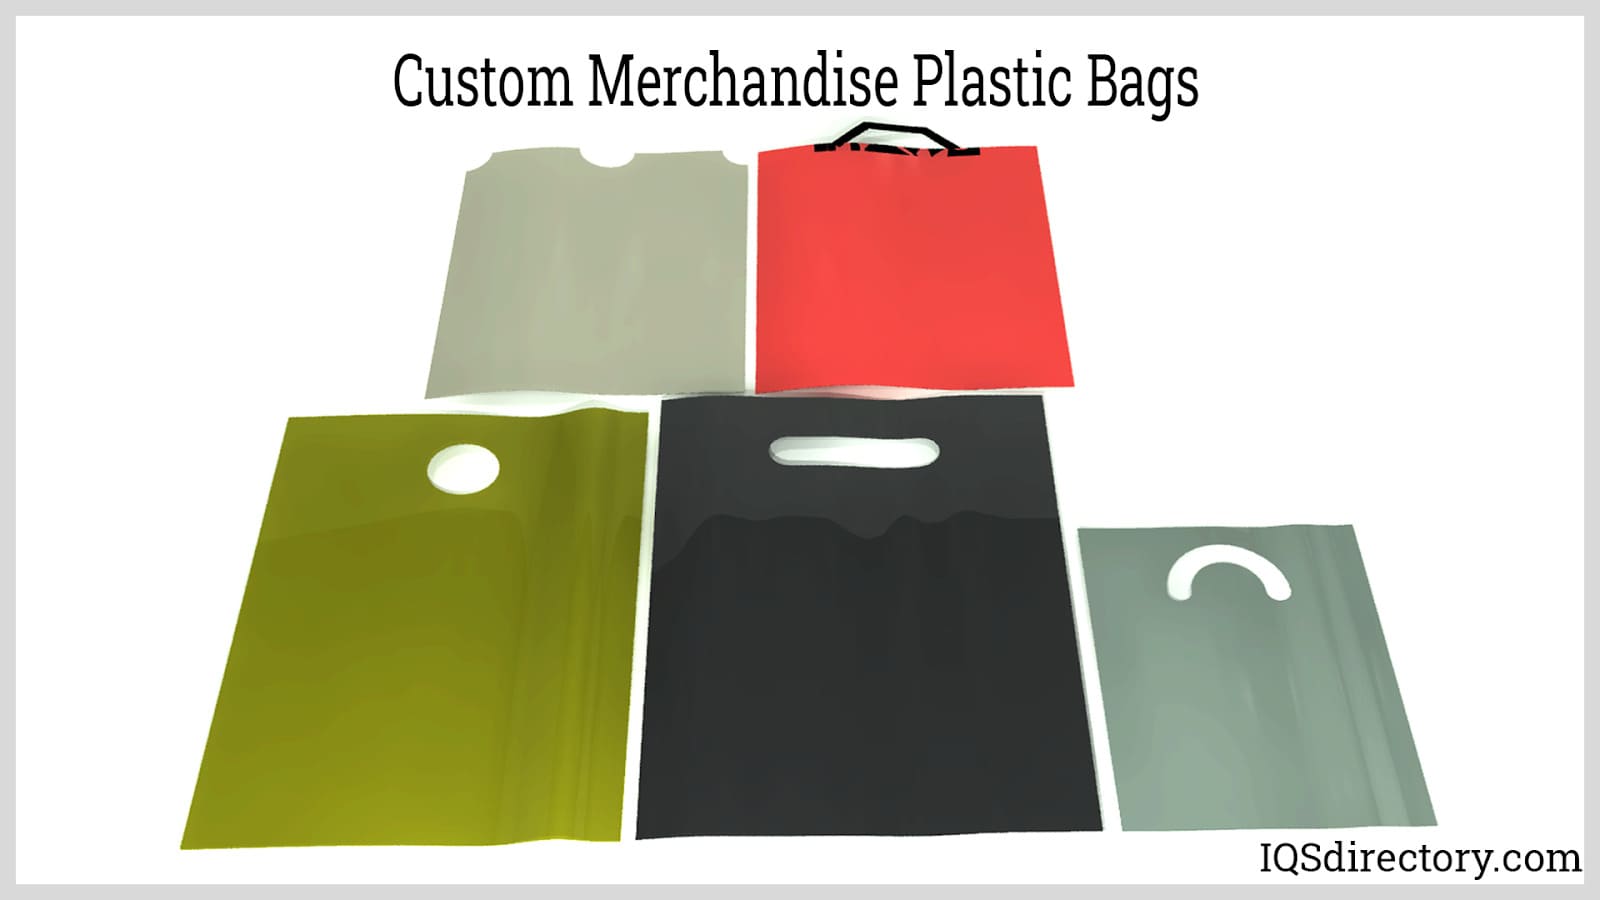 Polythene bag manufacturer, poly and plastic bags UK